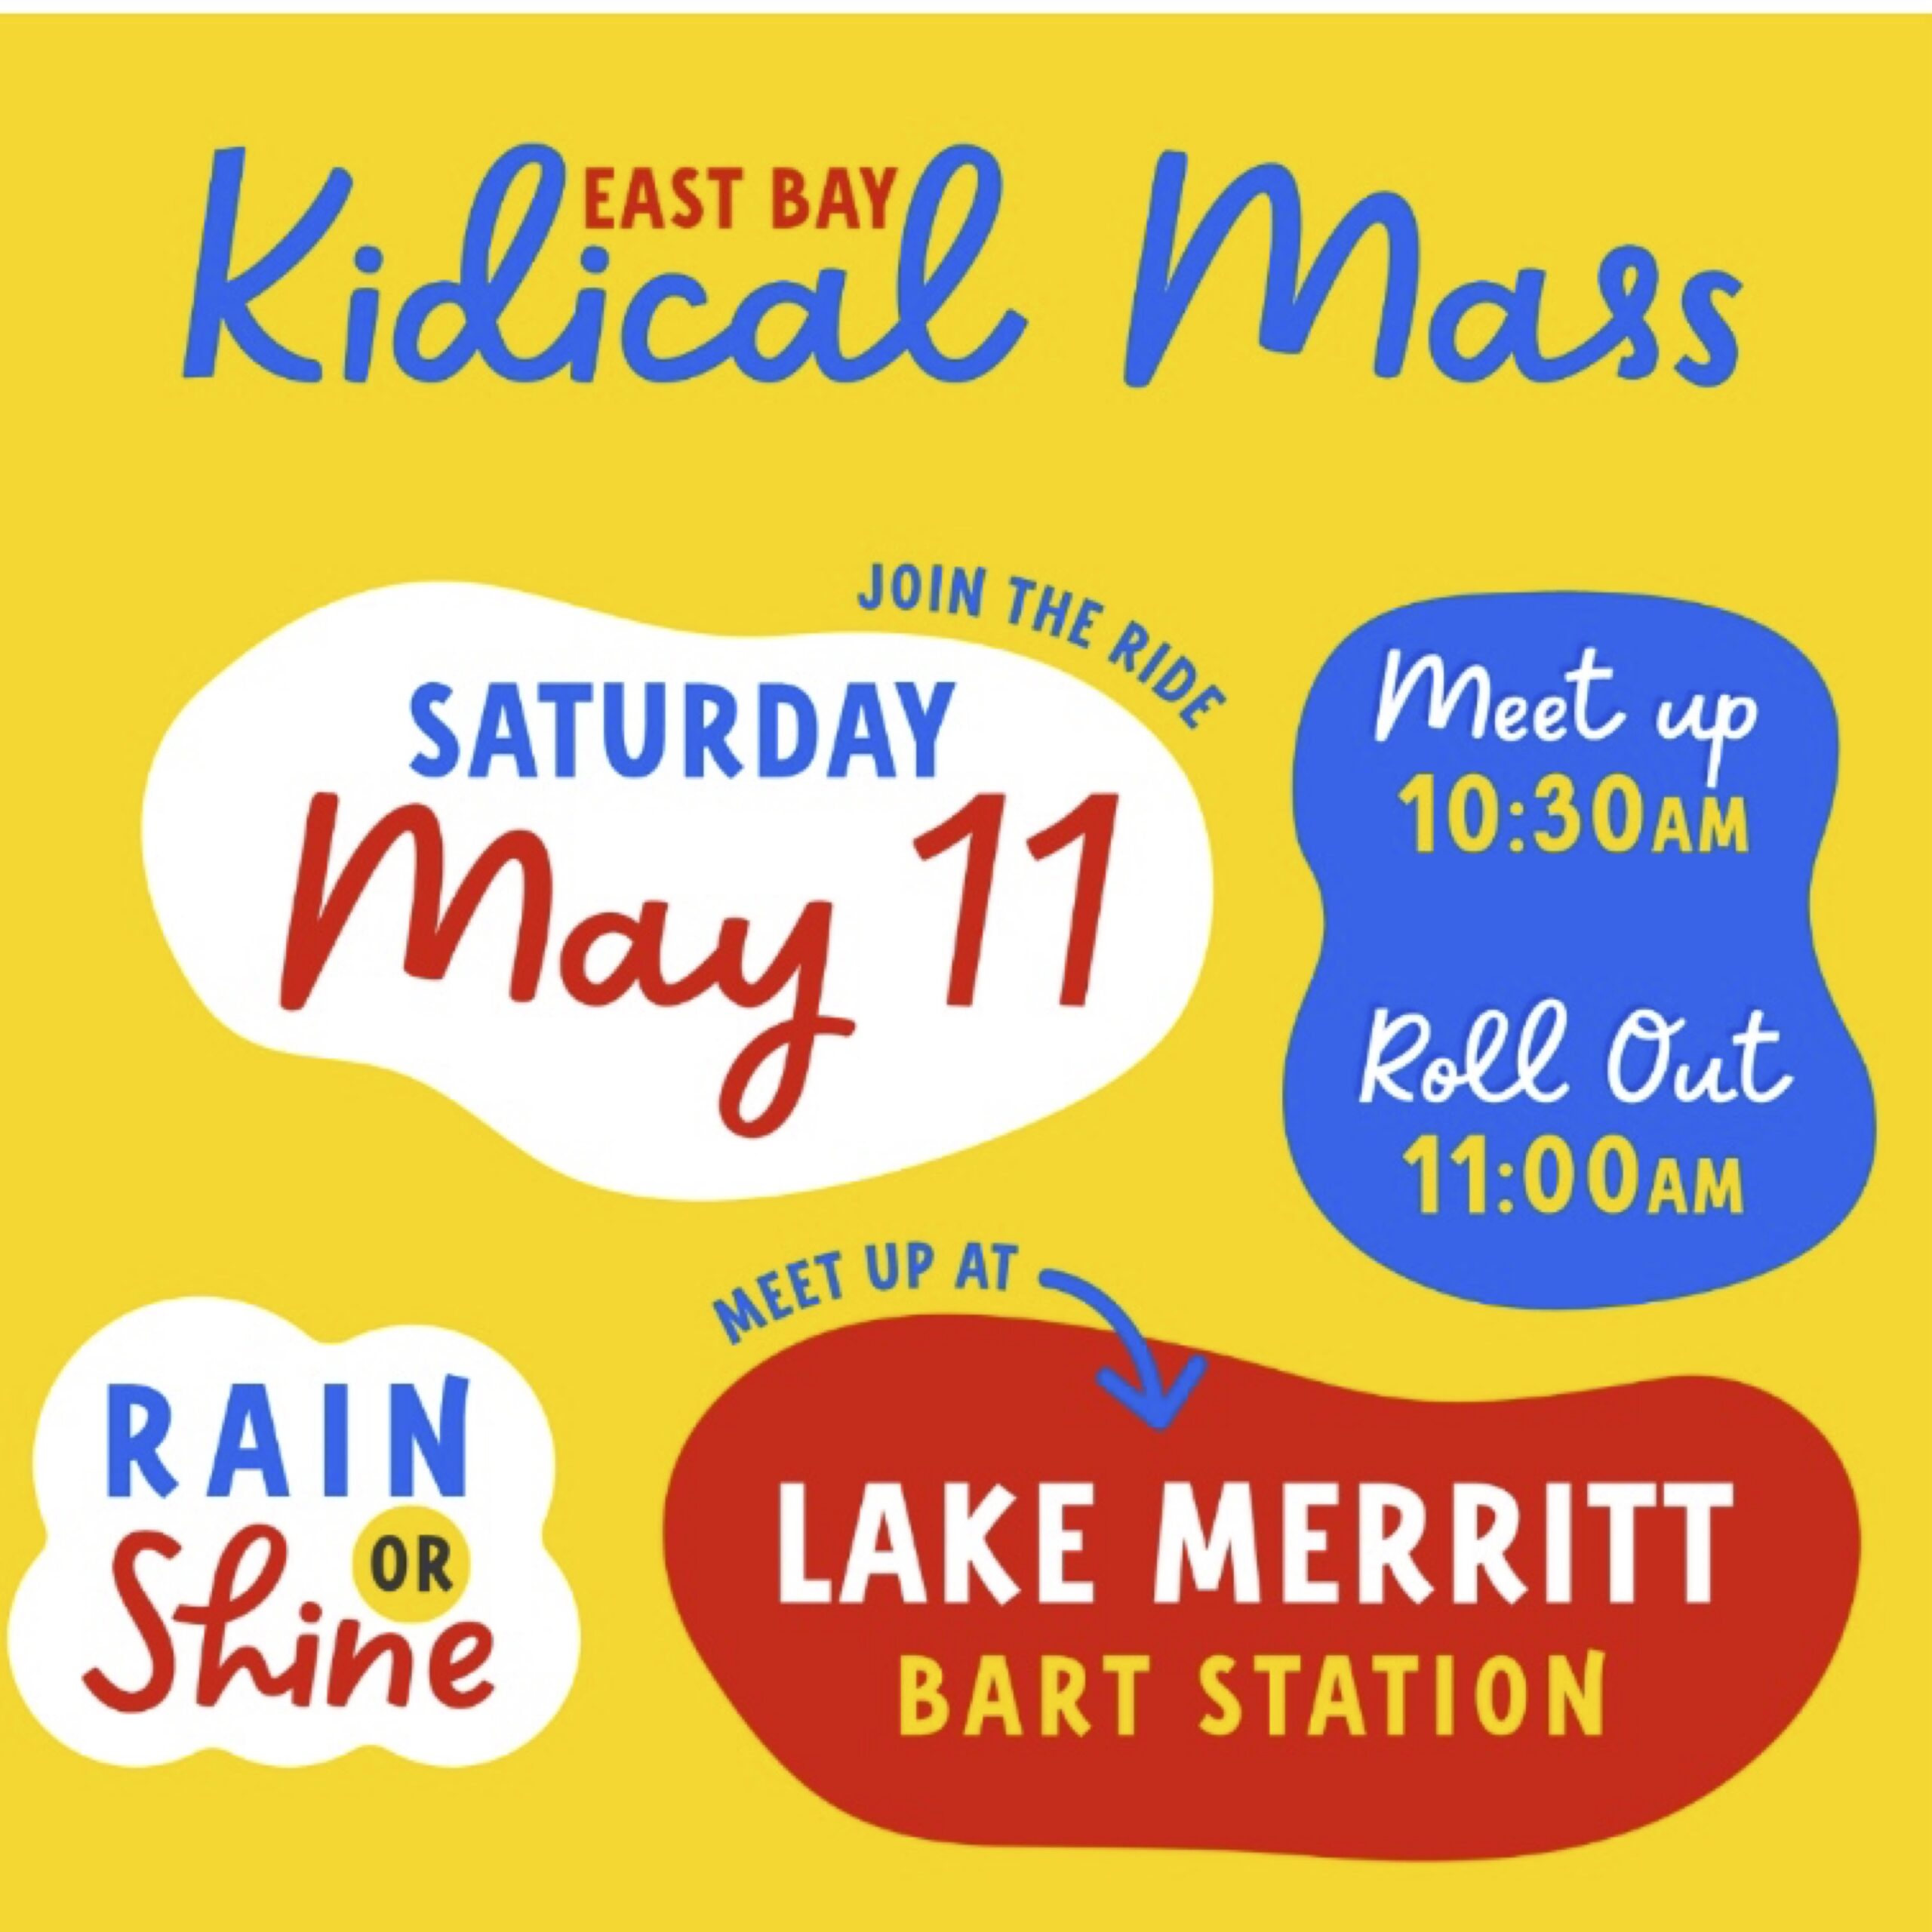 East Bay Kidical Mass, Oakland Lake Merritt Loop Ride